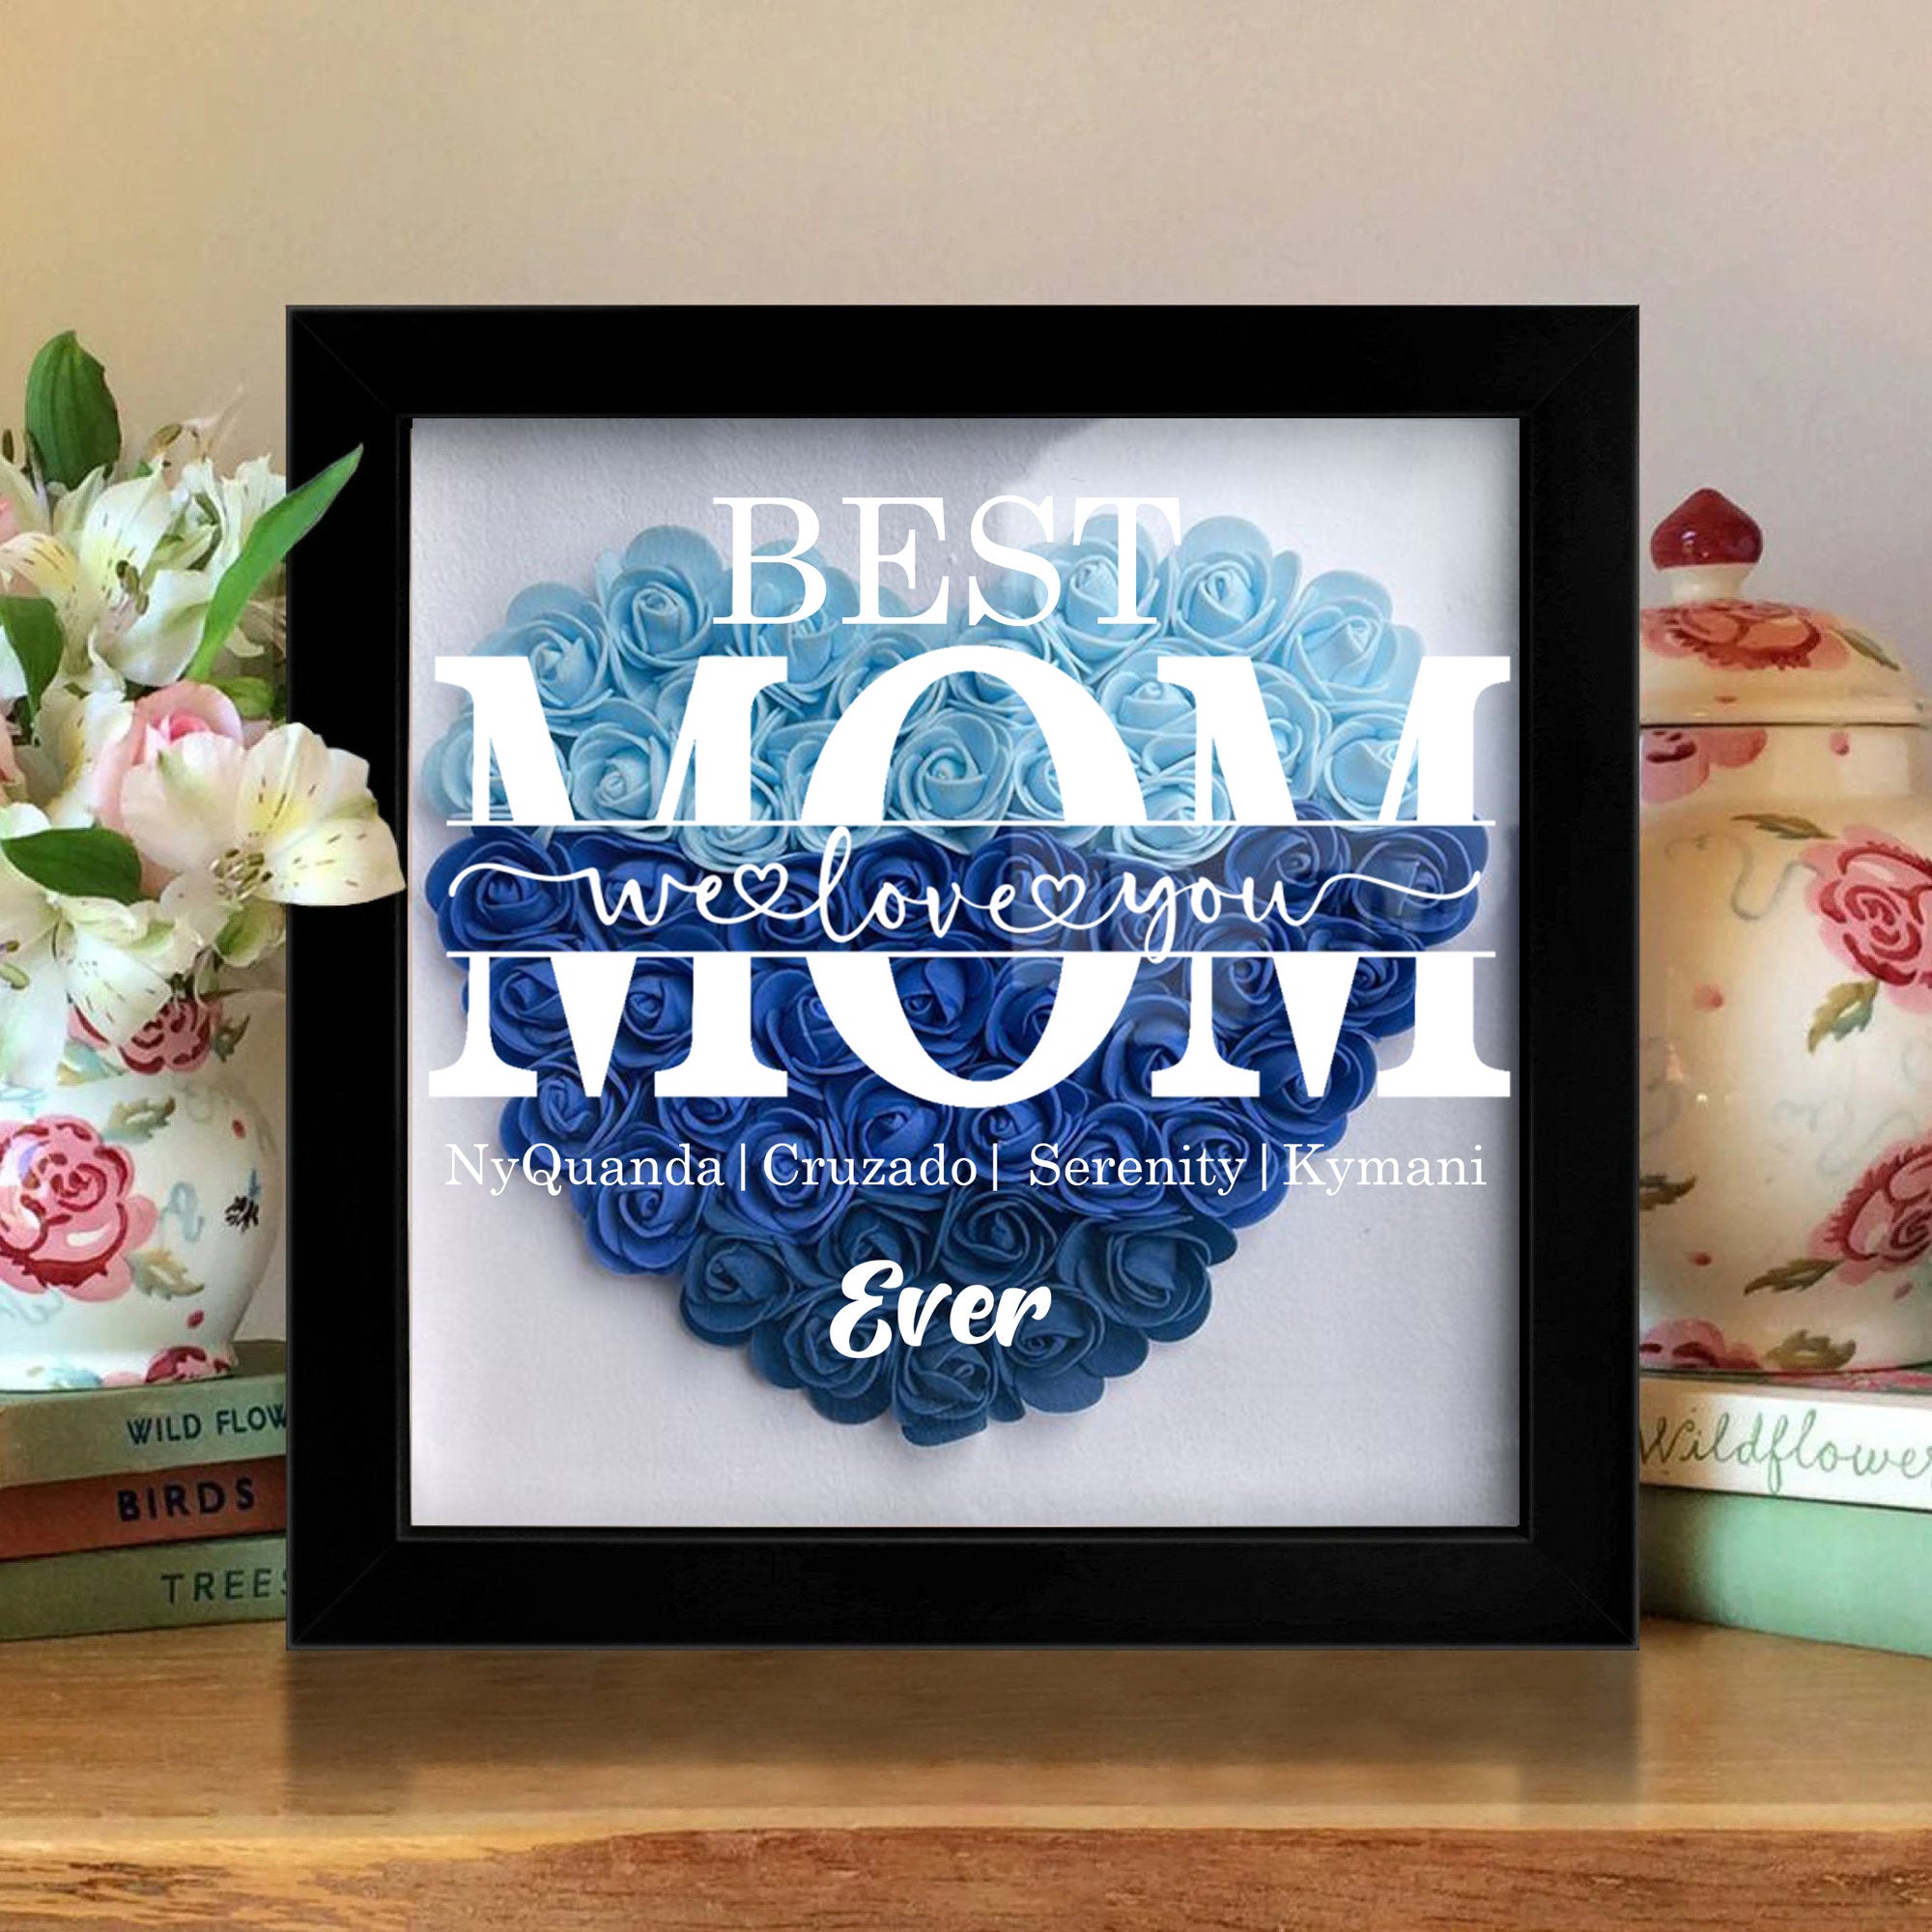 "Best Mom Ever" Heart Shaped Flower Shadow Box | Customized Gift for MUM, Nana Grandma (Customized free)